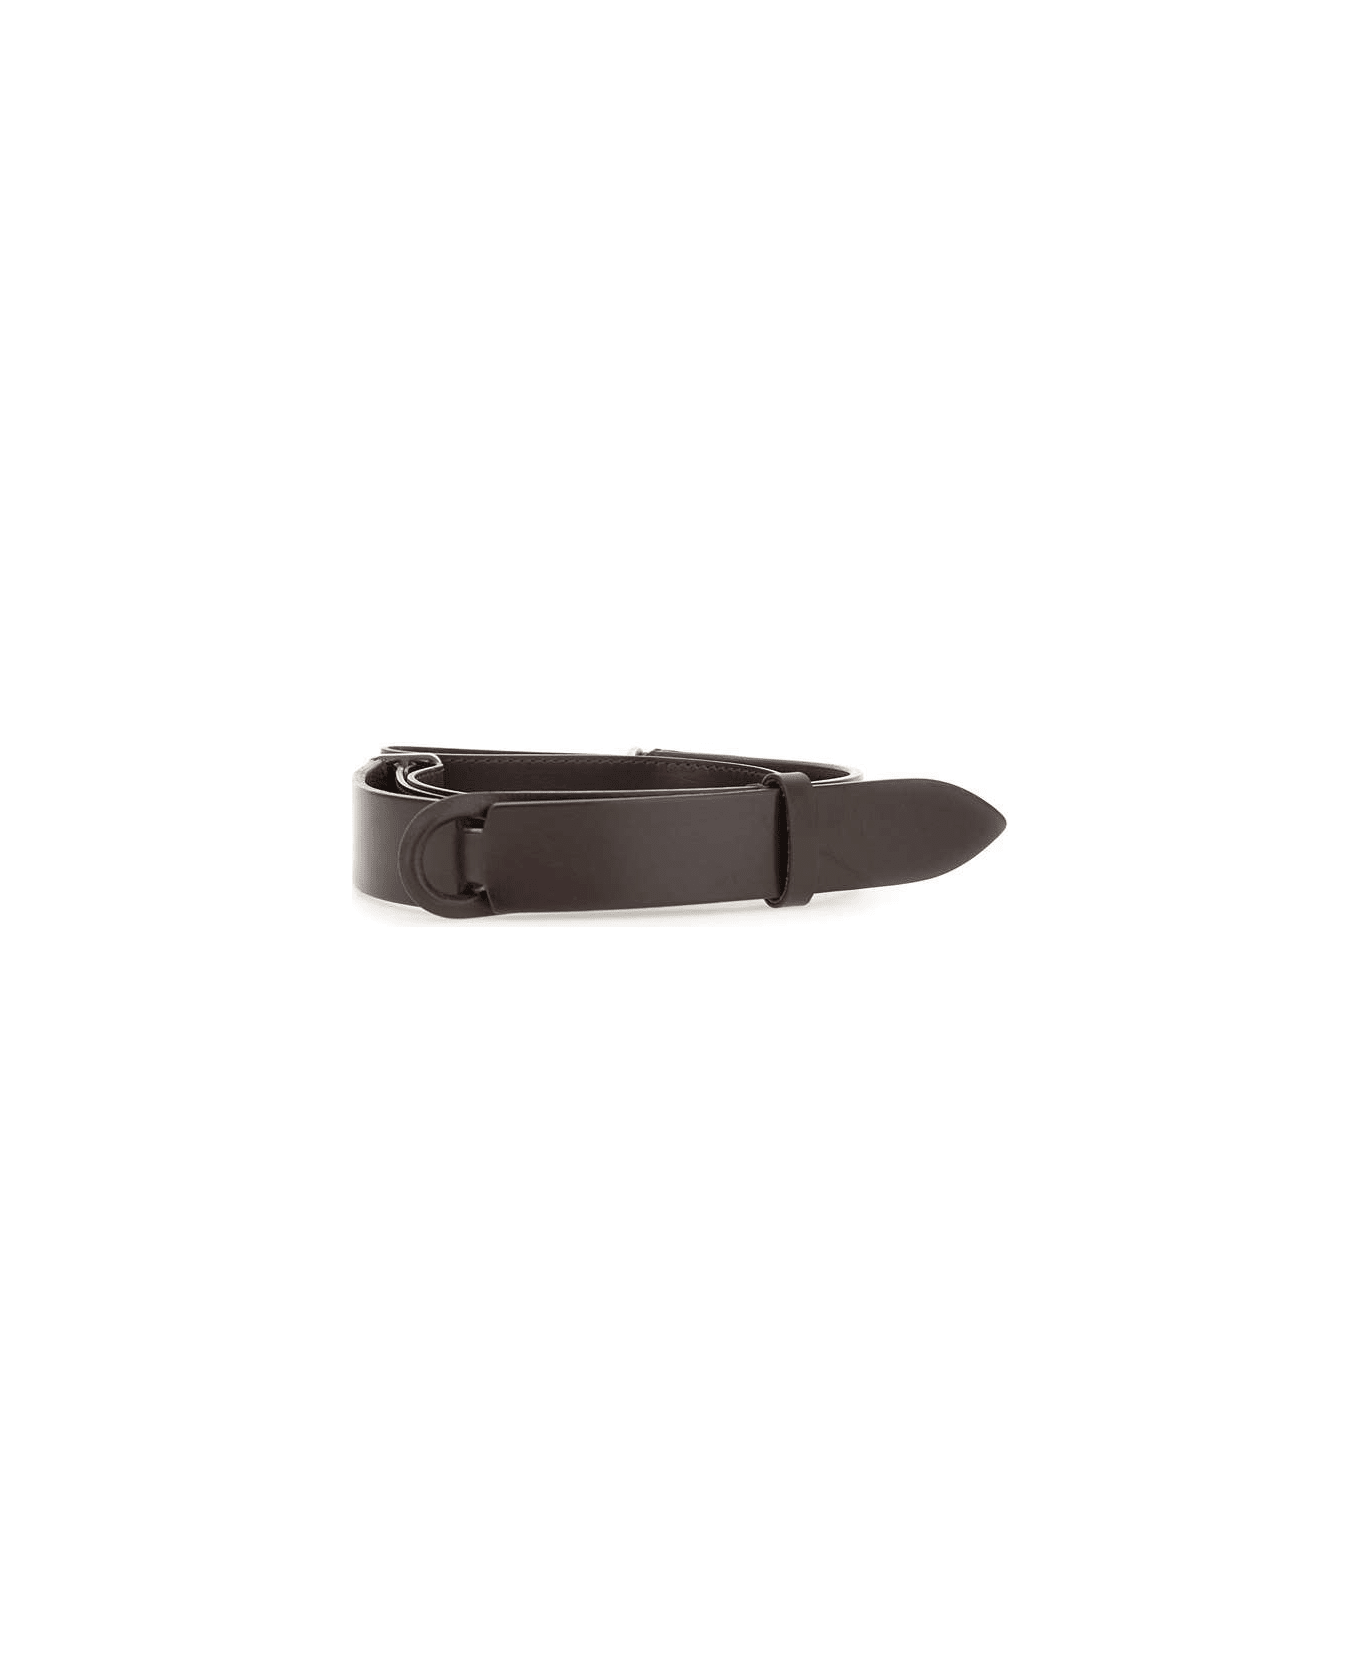 Orciani "nobukle Bull" Leather Belt - BROWN